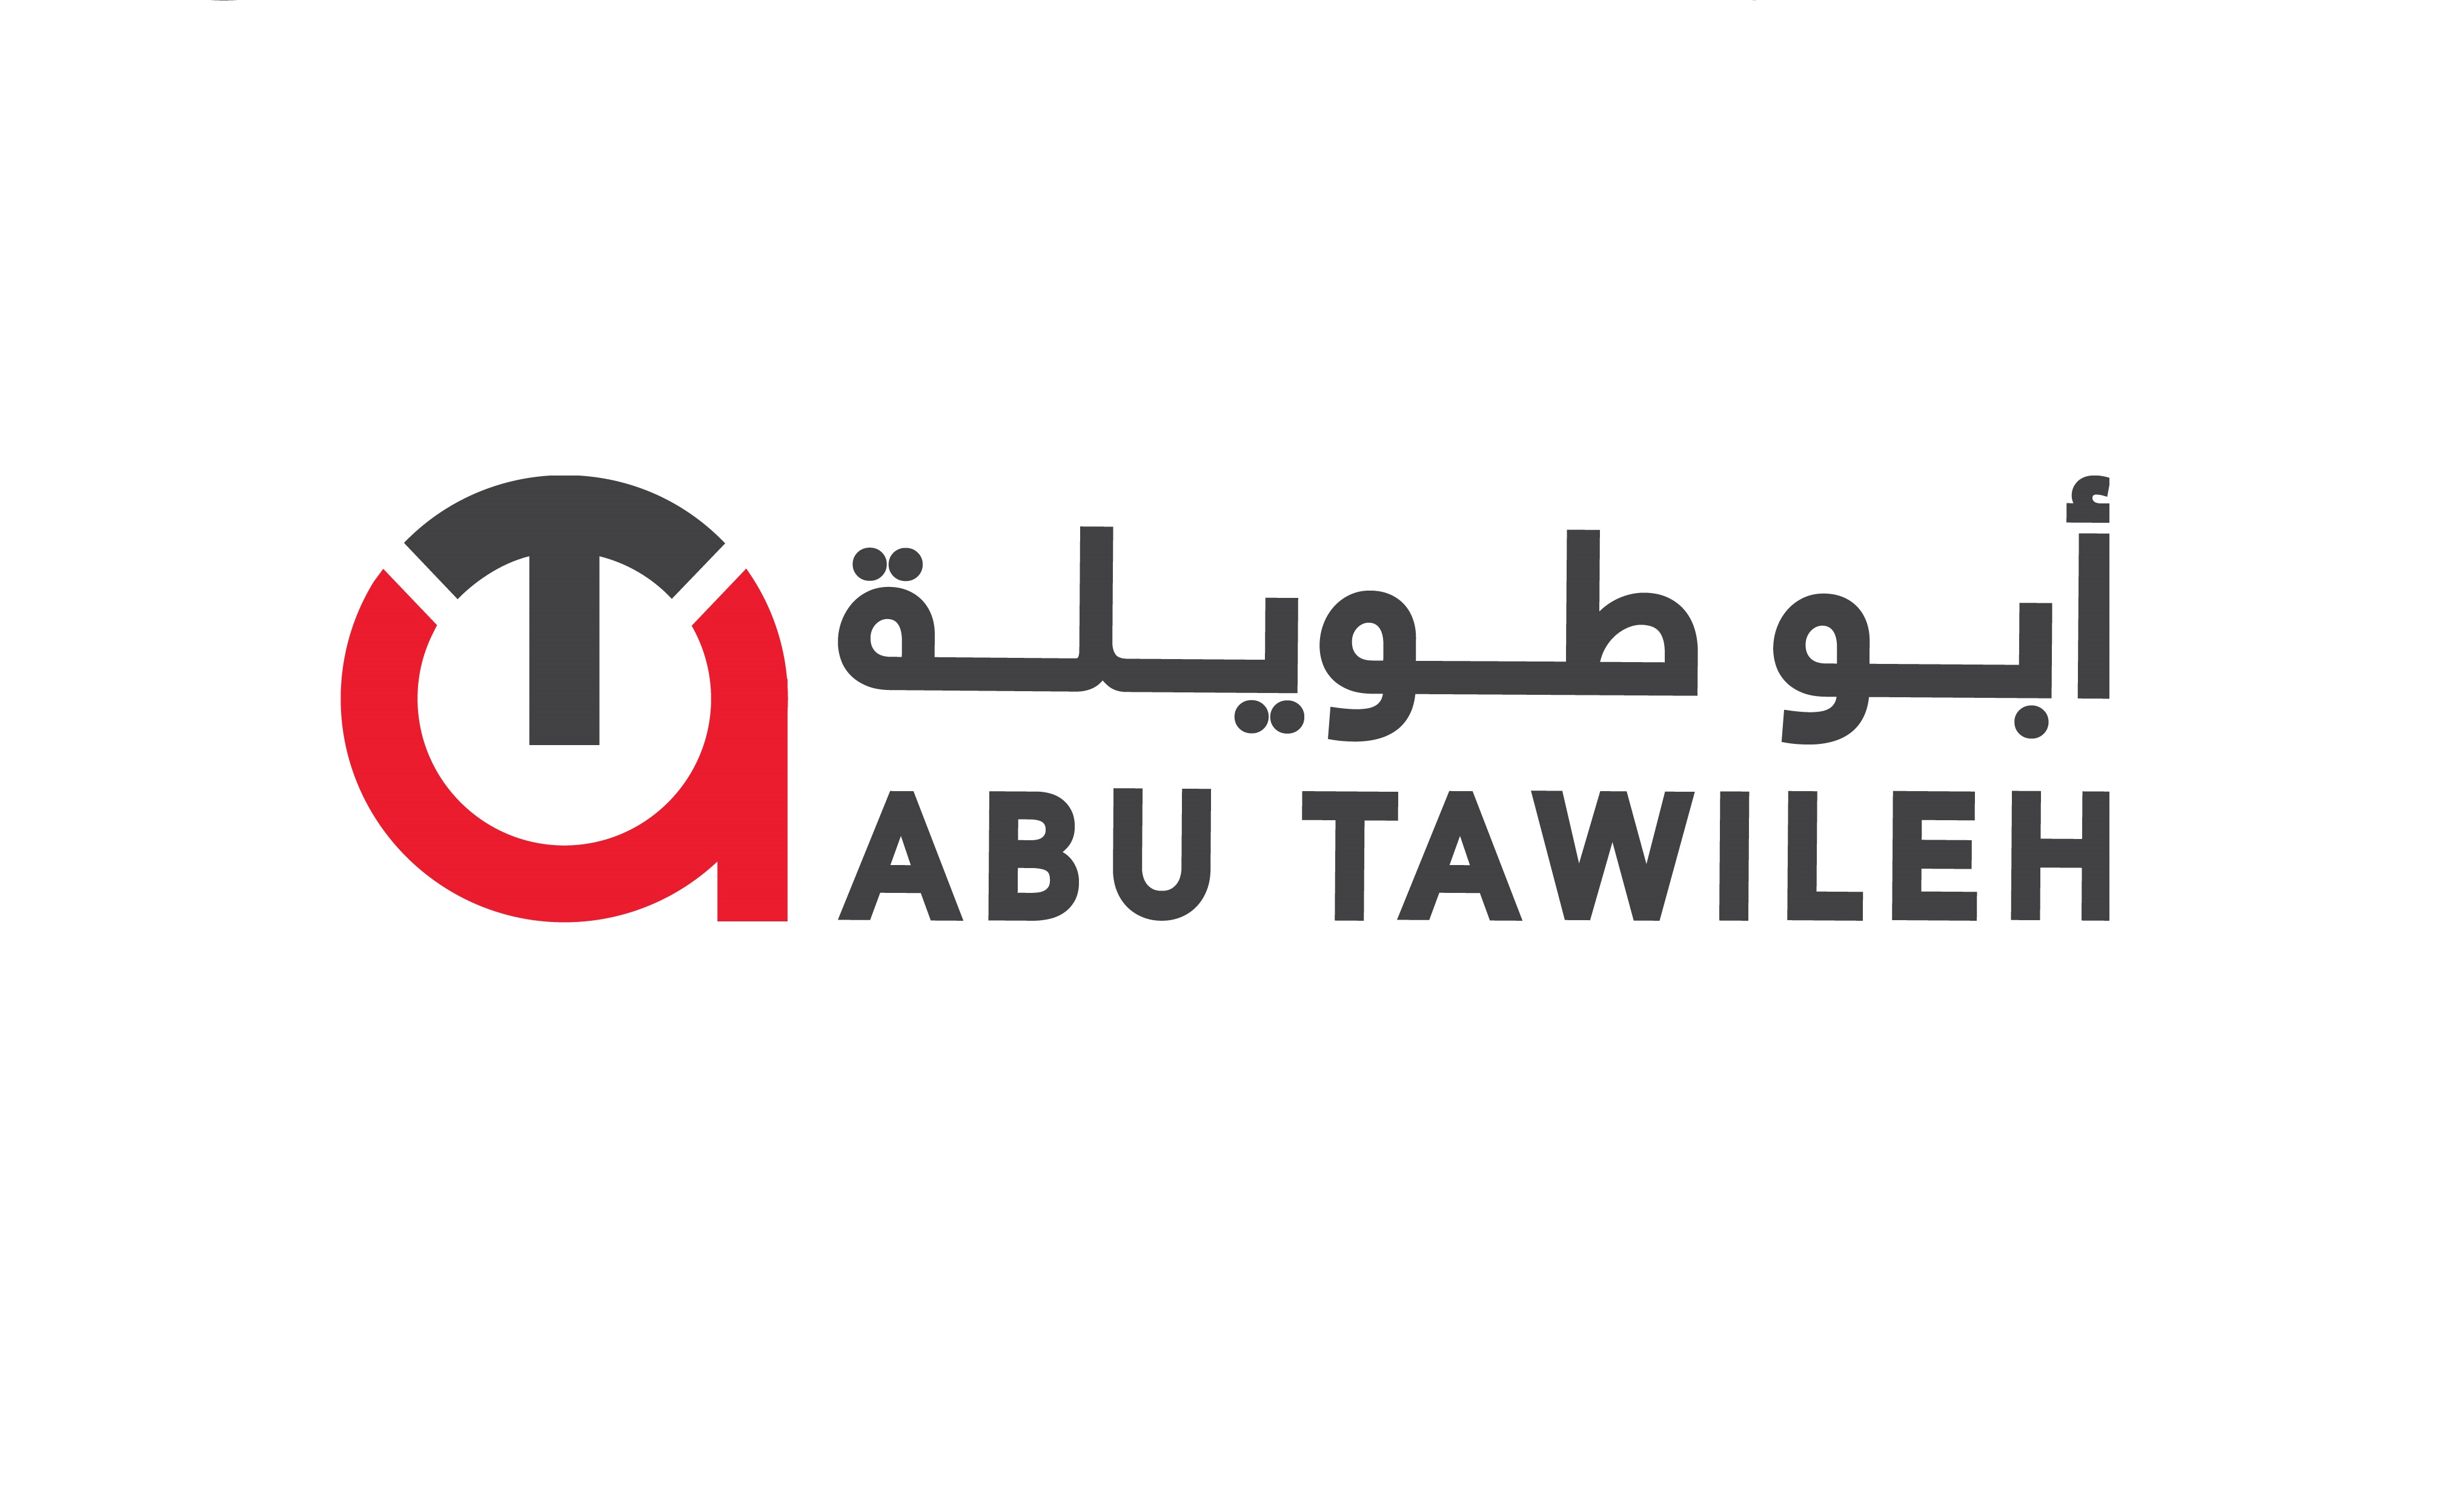 Abu Tawileh Abu Nseir